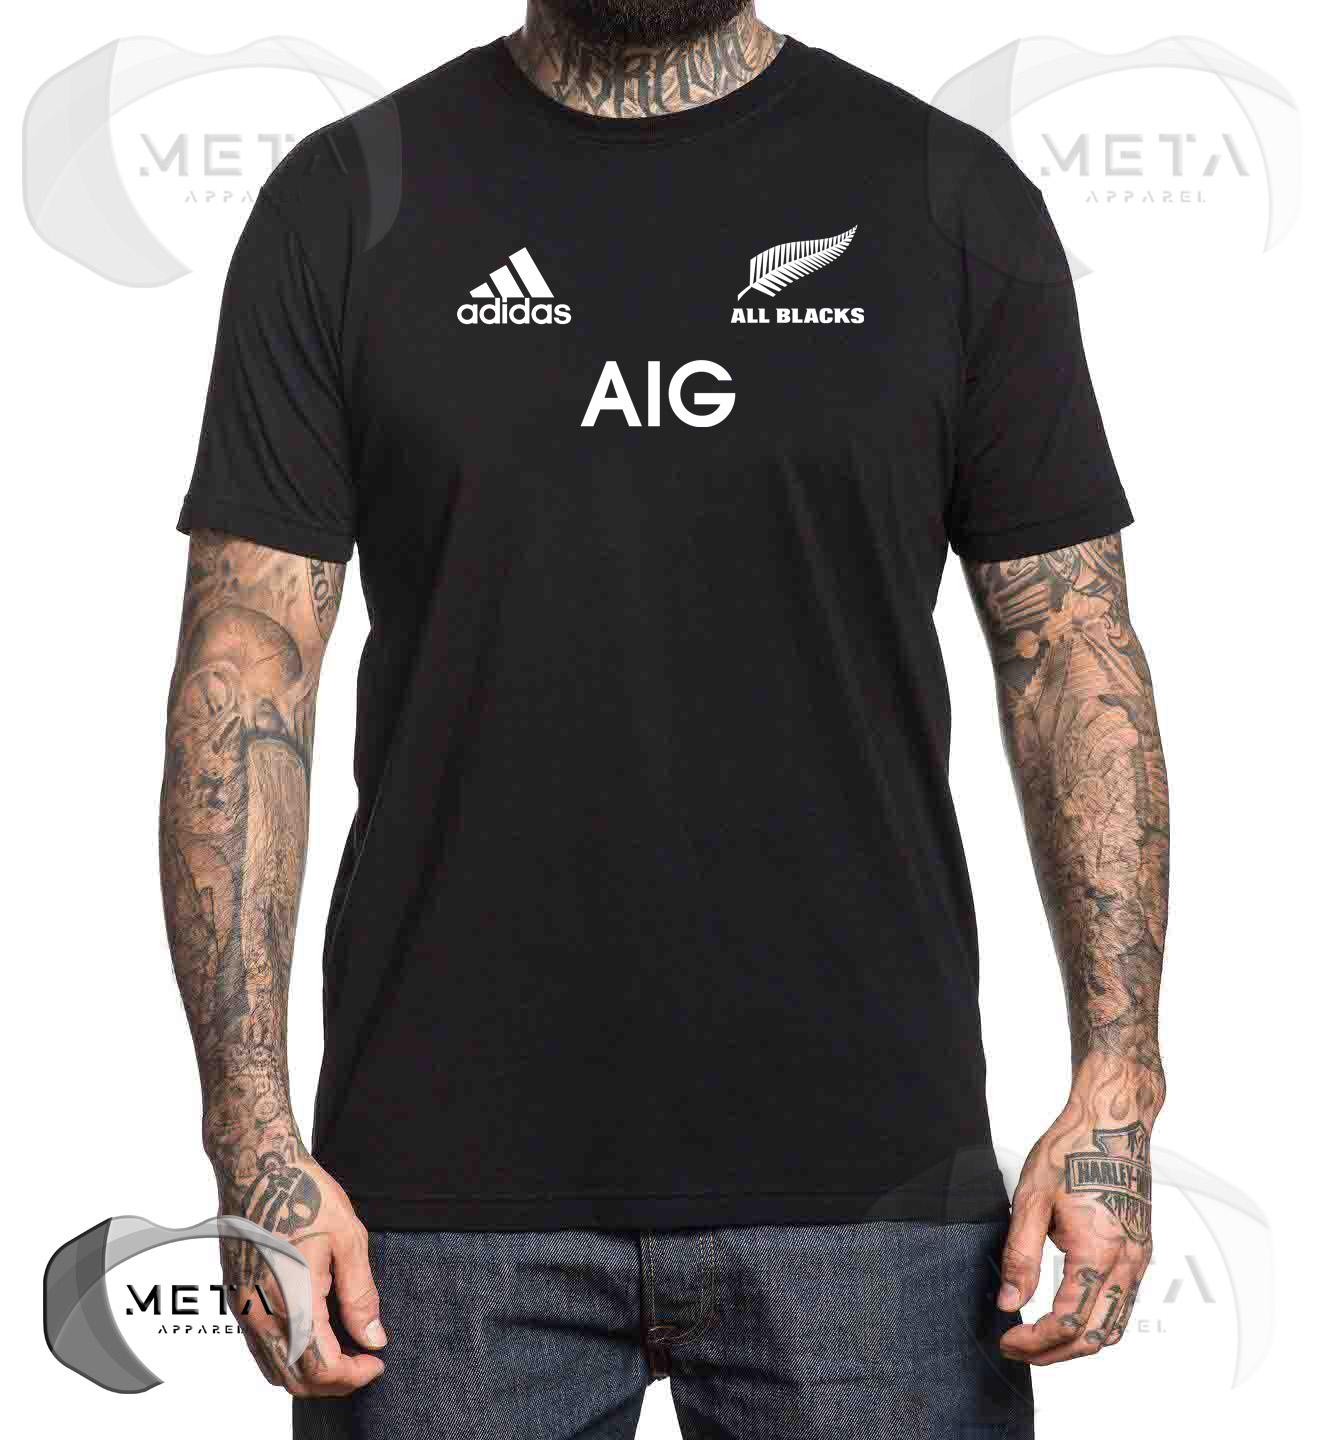 Uittreksel droefheid Wedstrijd ADIDAS All Blacks 1st Replic AIG Shirt Fan Inspired Famous Rugby T-Shirt  Minimalist META Personalized (Black) | Lazada PH